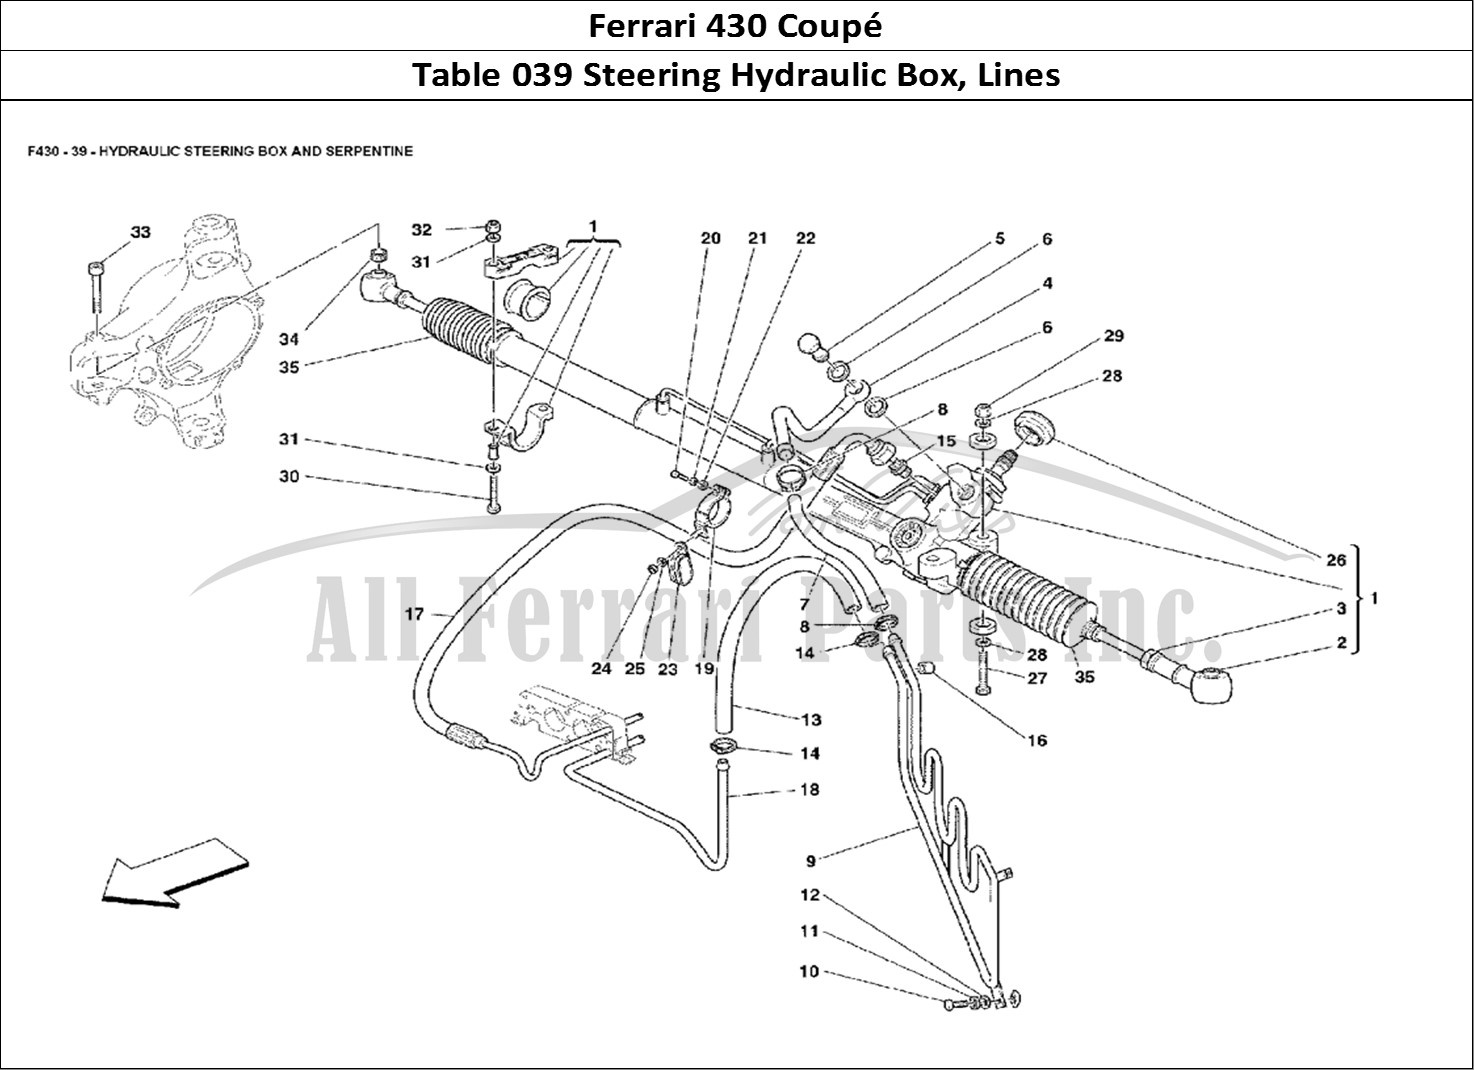 Ferrari Parts Ferrari 430 Coup Page 039 Hydraulic Steering Box an